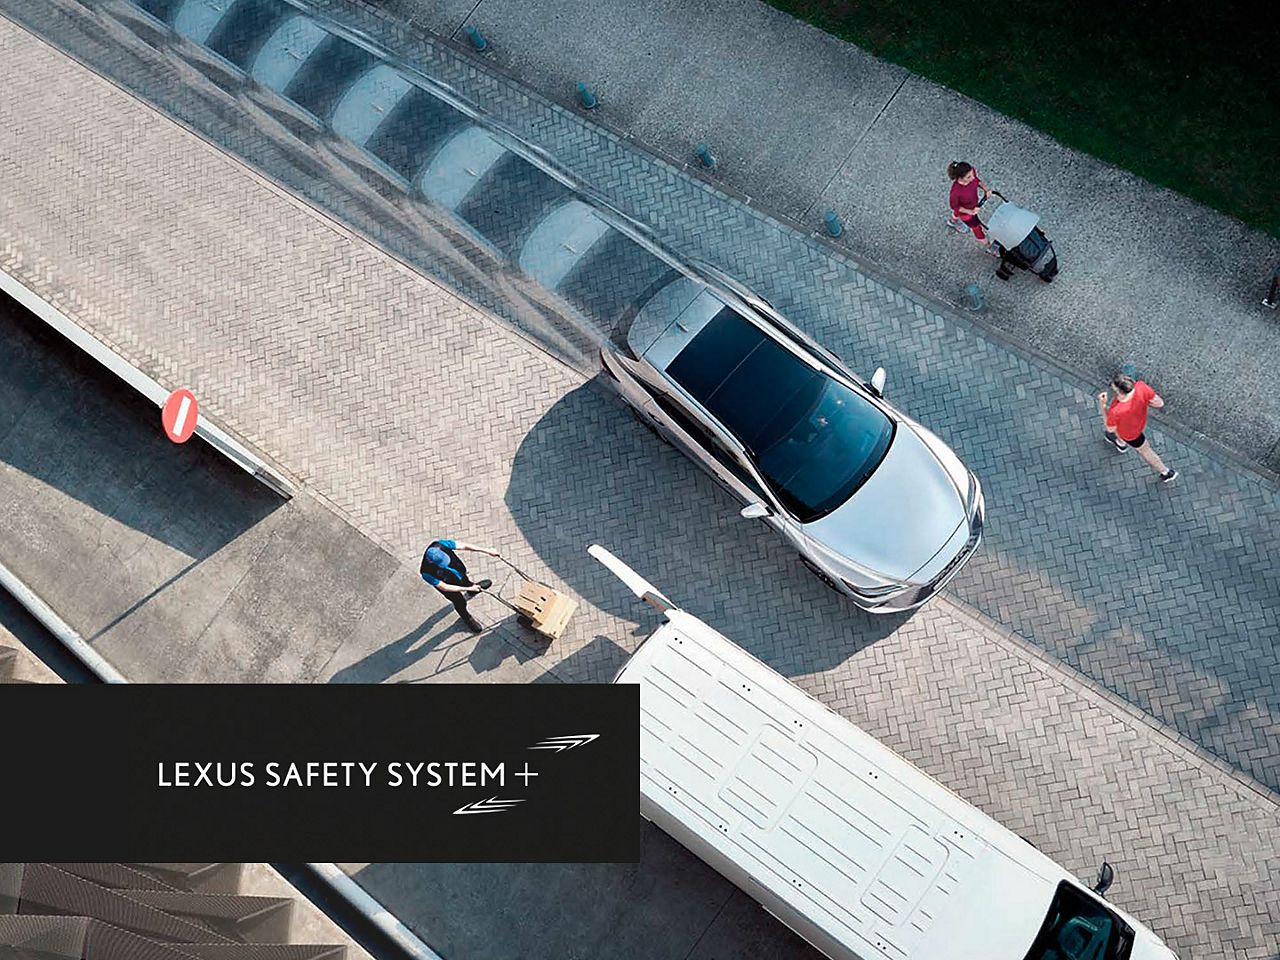 Lexus Safety System presentation